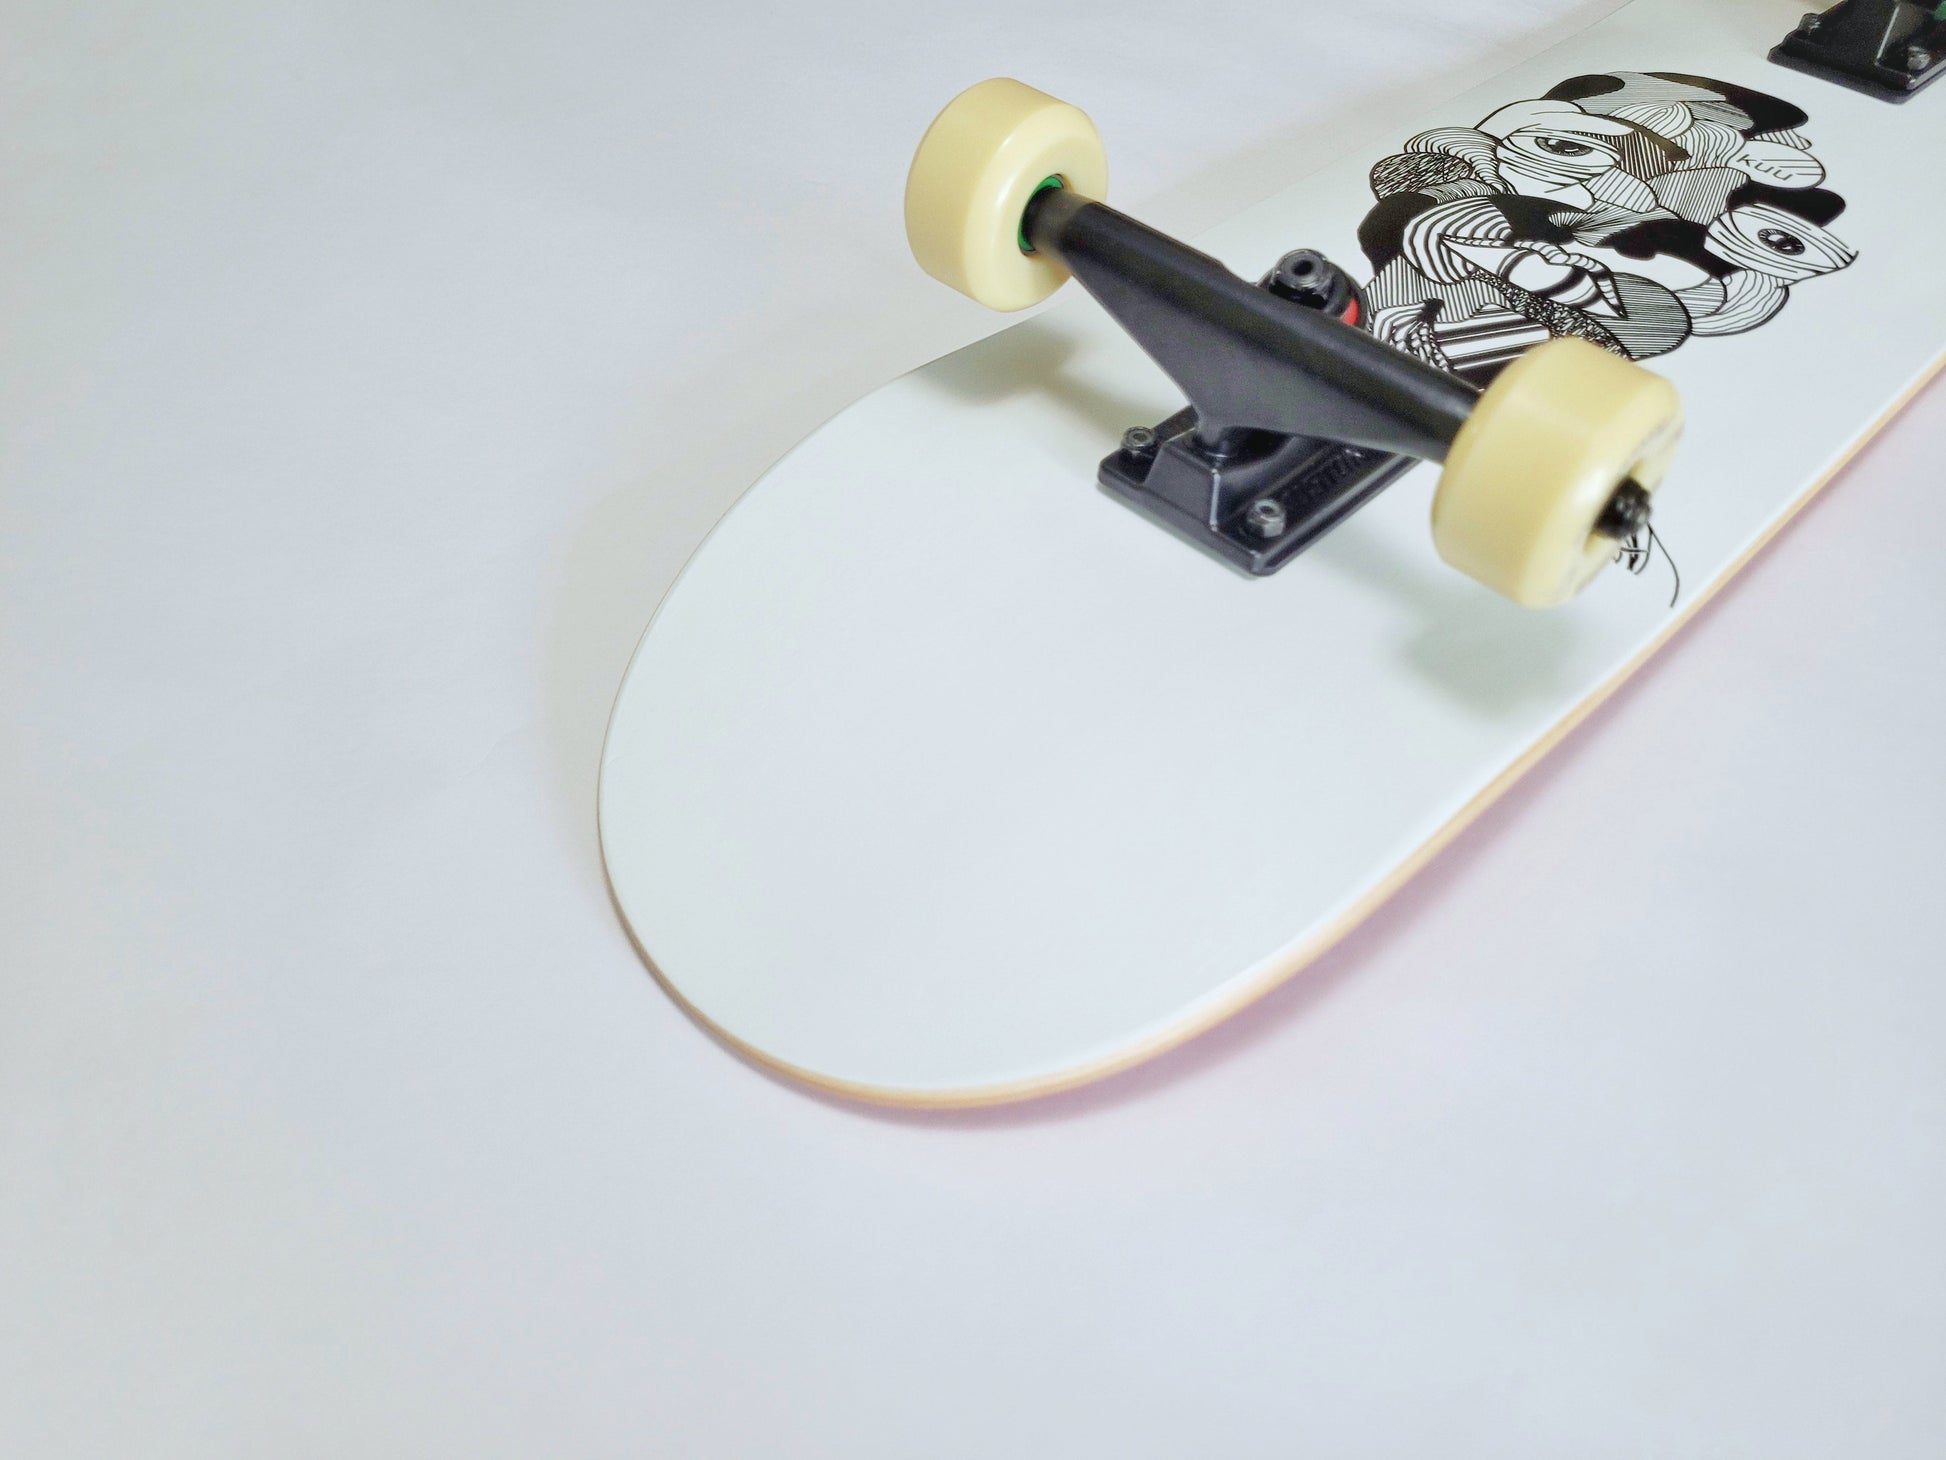 Élan X Kuu Complete Skateboard - SkatebruhSG